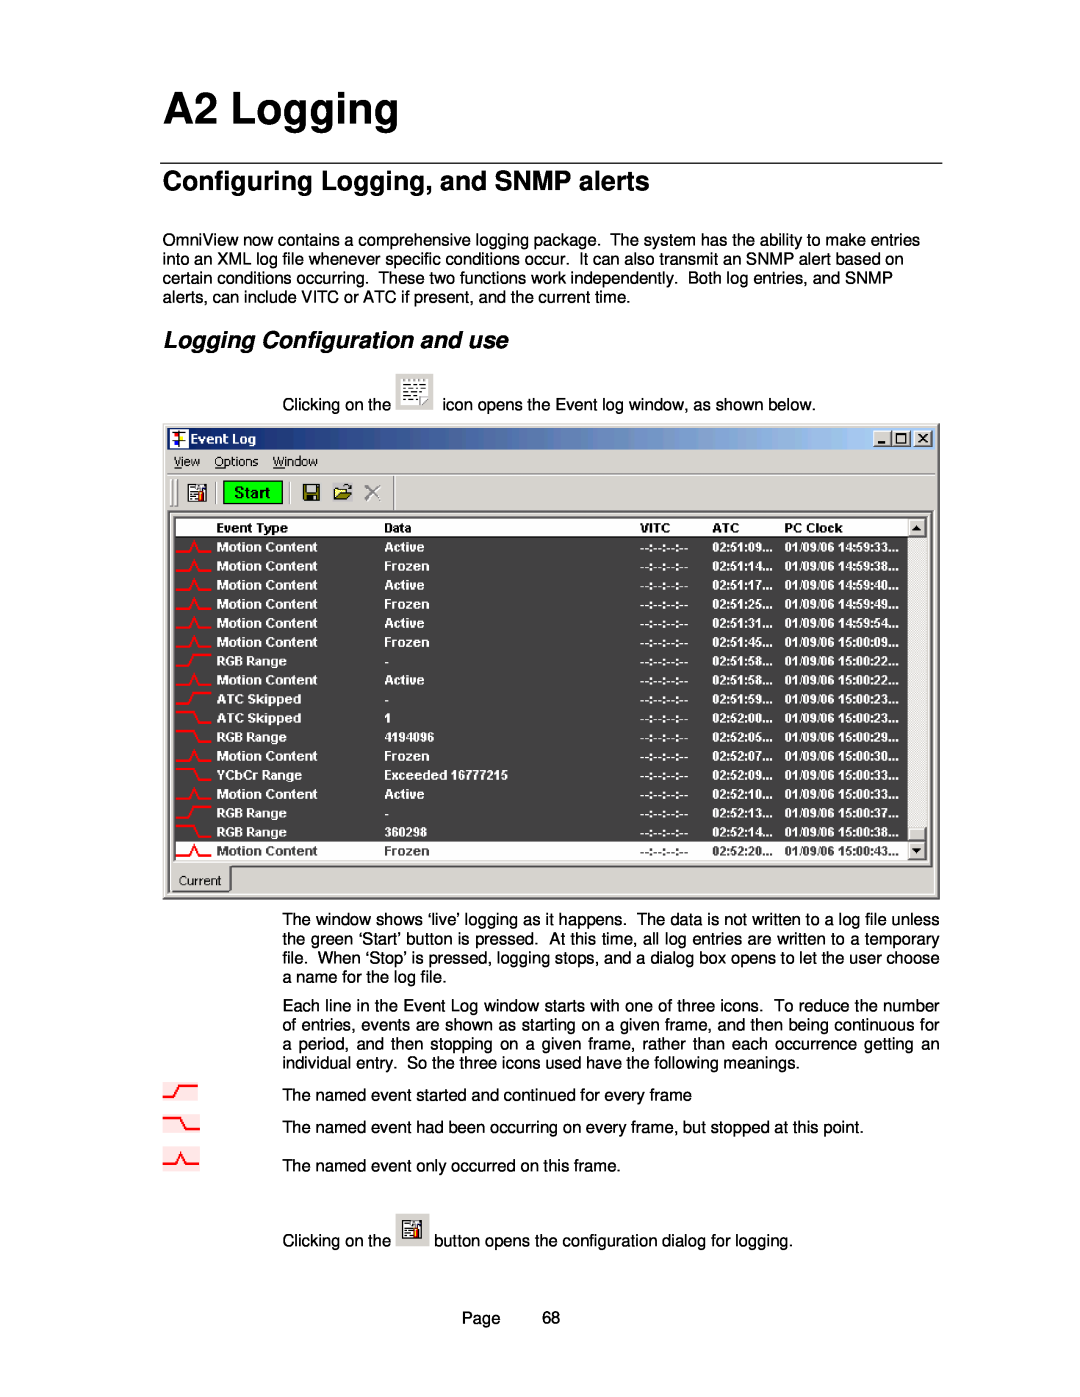 OmniTek OmniTek XR manual A2 Logging, Configuring Logging, and SNMP alerts, Logging Configuration and use 